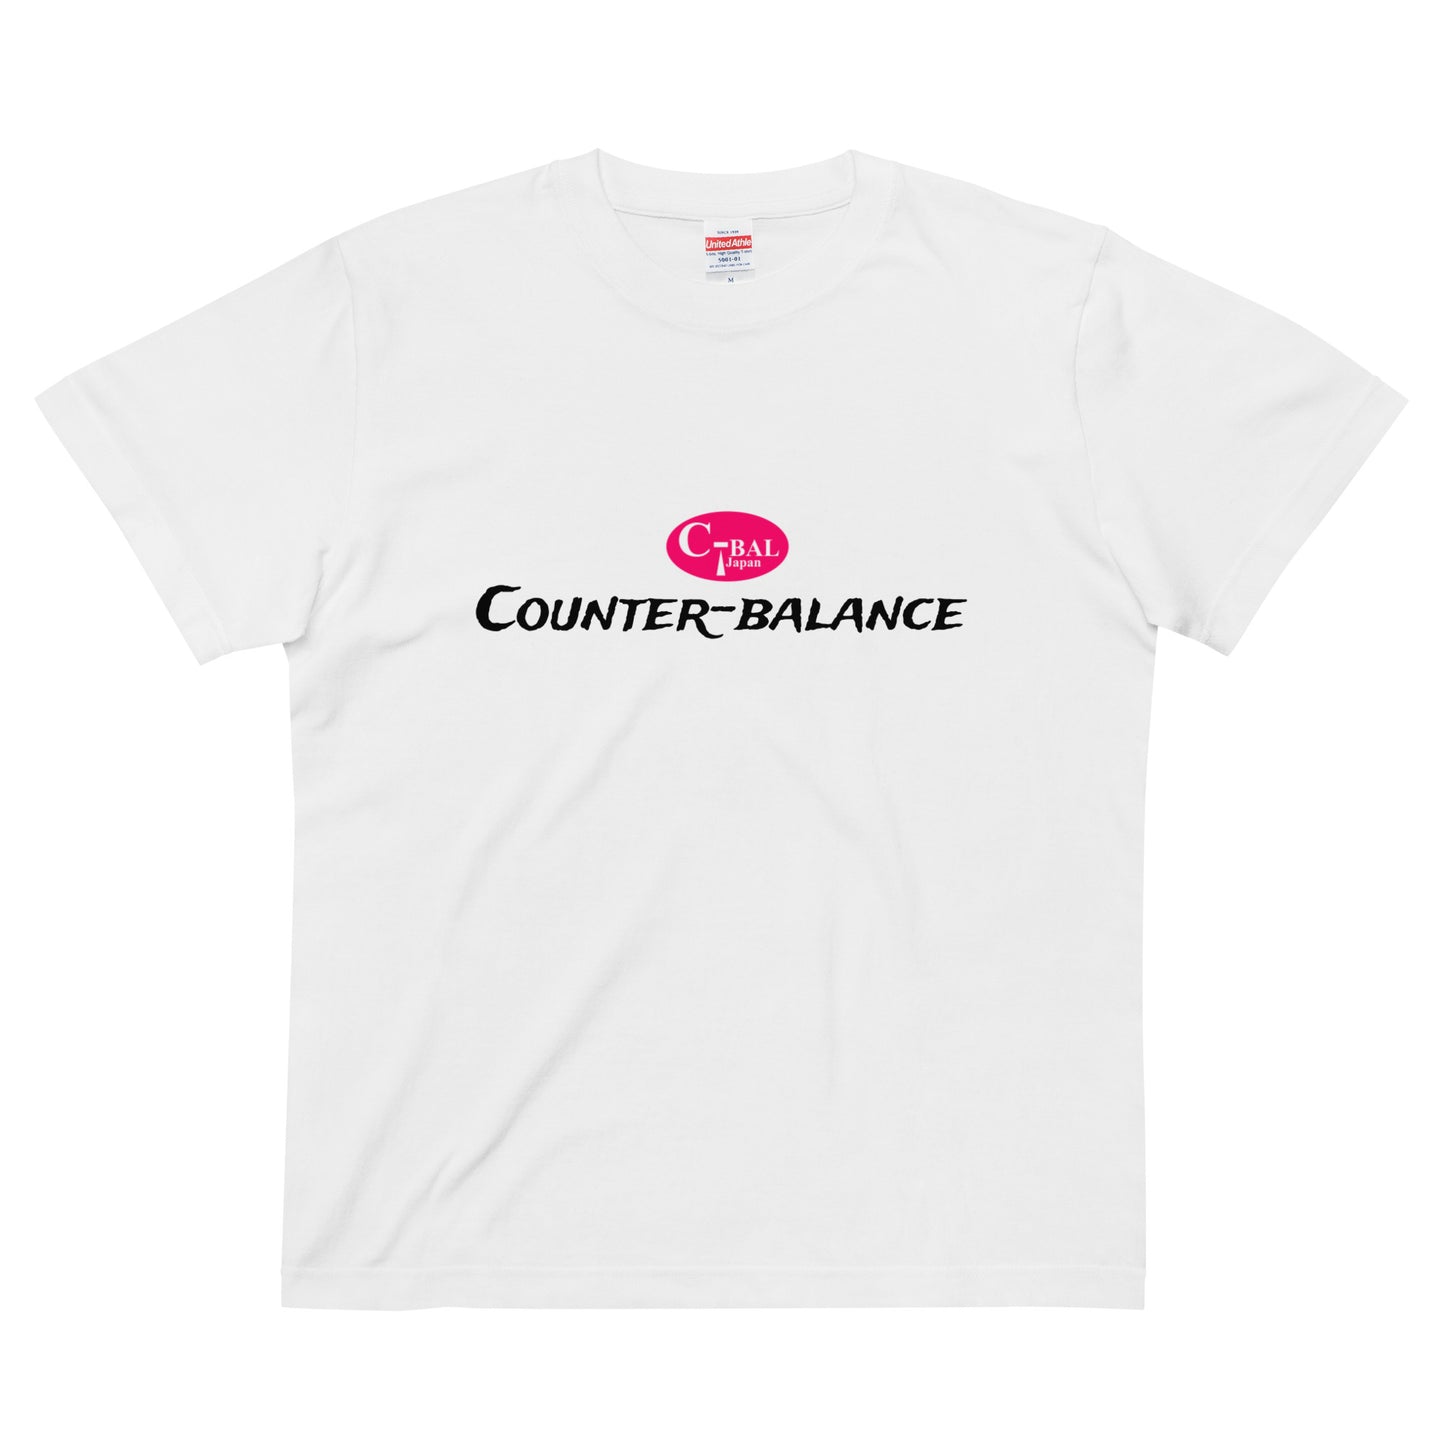 A006 - High Quality Cotton T-shirt (C-BAL : White / Pink)